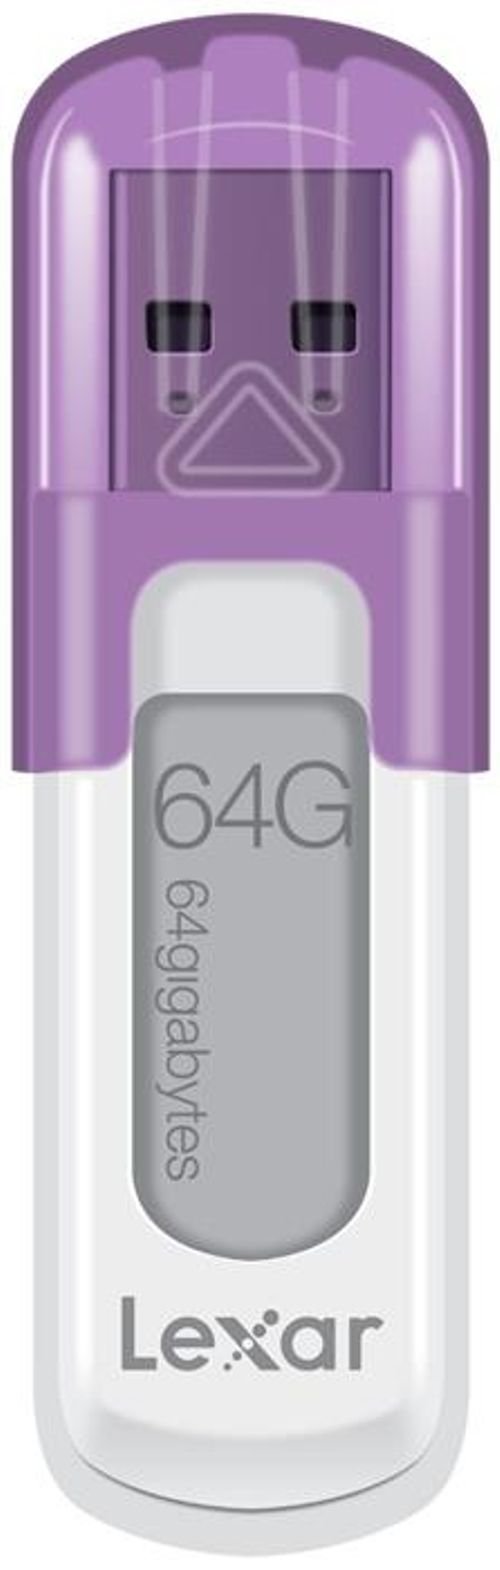 فلاش USB جامب درايف V10 لكسار - 64 جيجابايت - أرجواني - CB325HE